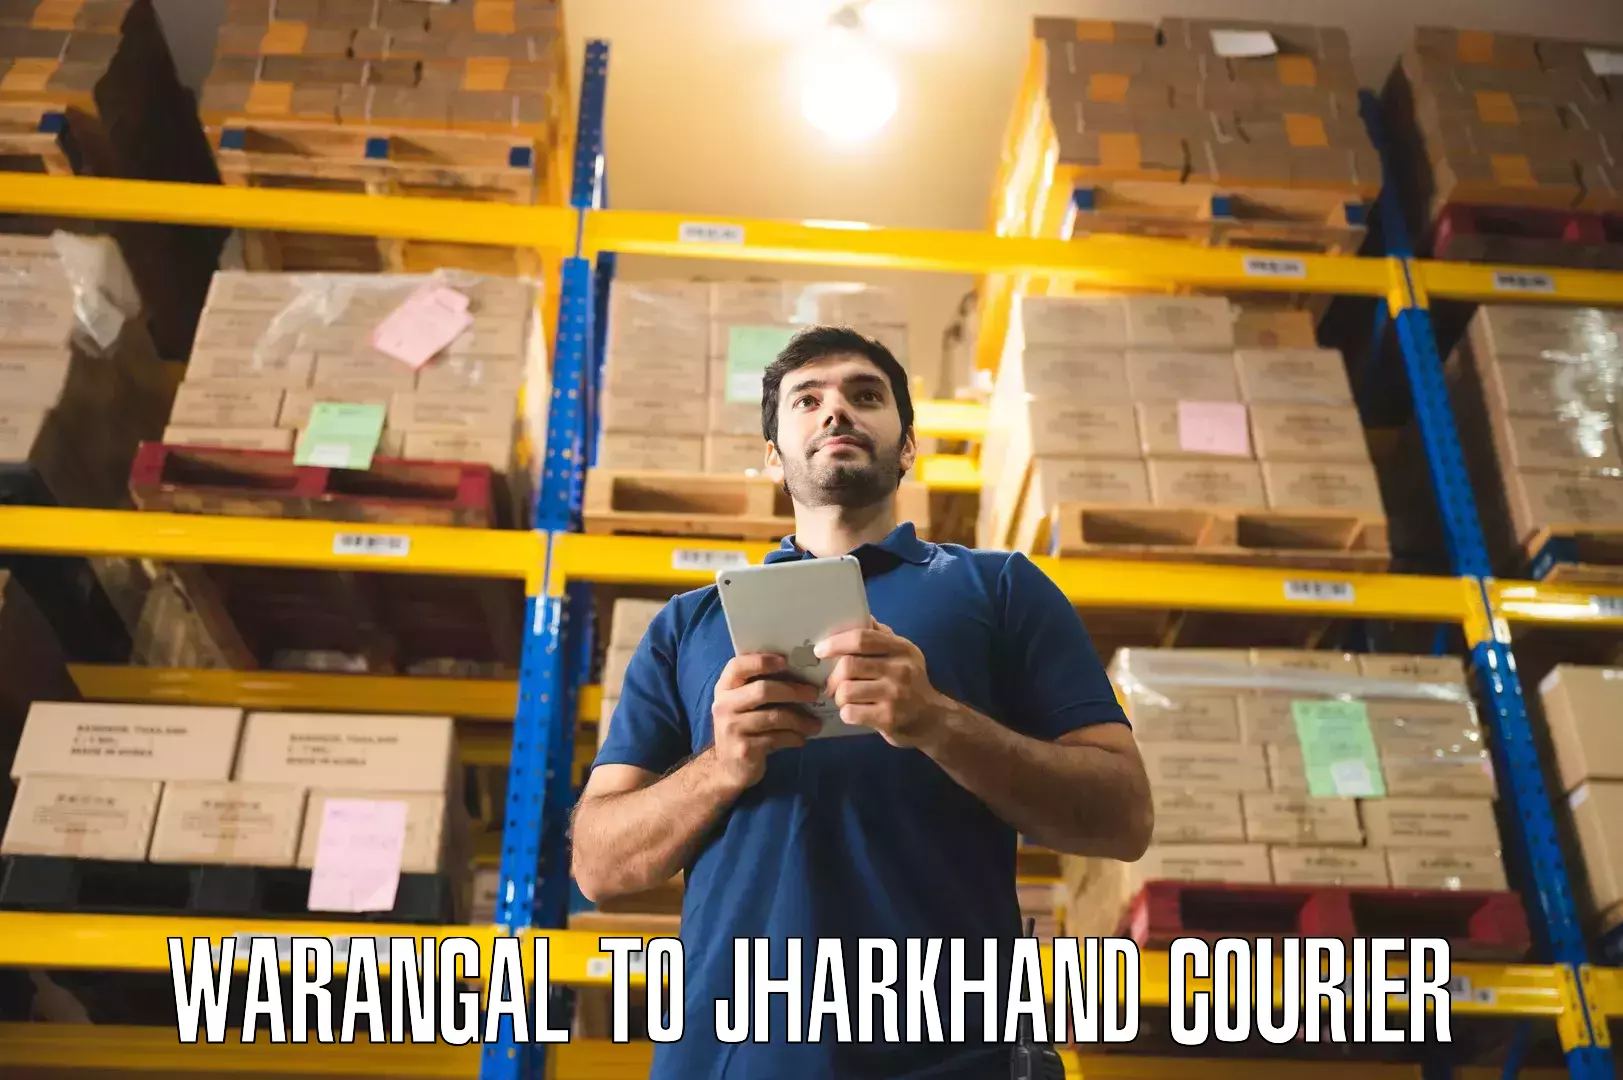 Professional moving company Warangal to Manoharpur